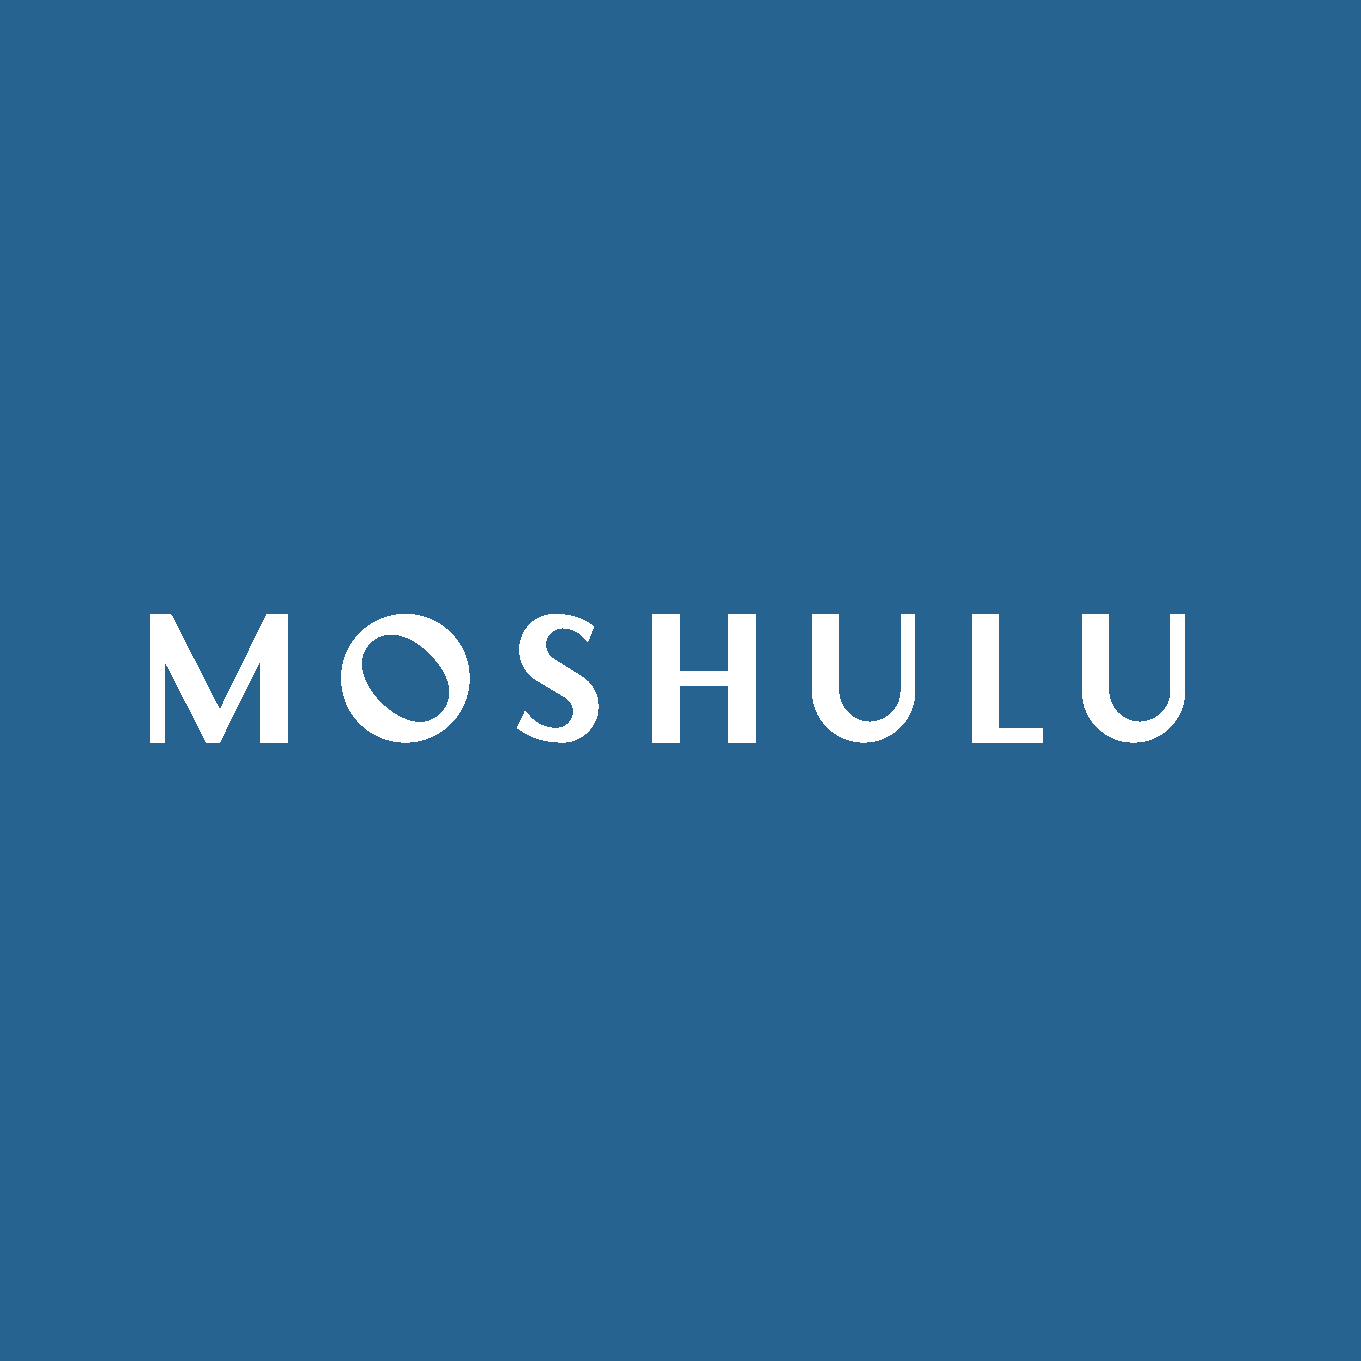 Moshulu Photo